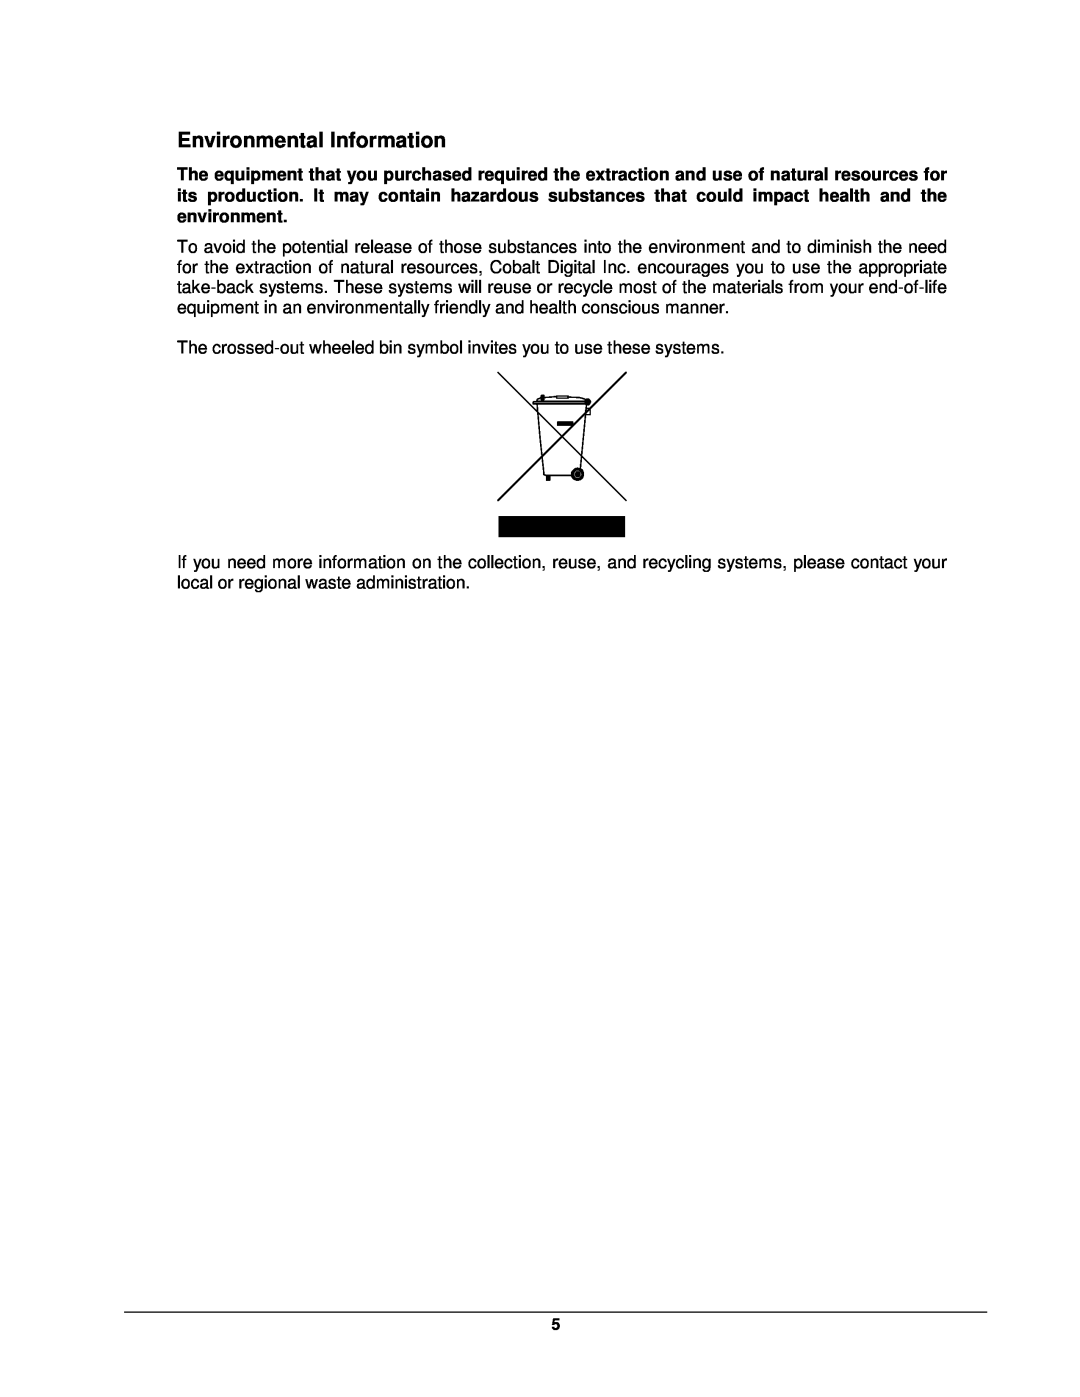 Cobalt Networks 9252 user manual Environmental Information 